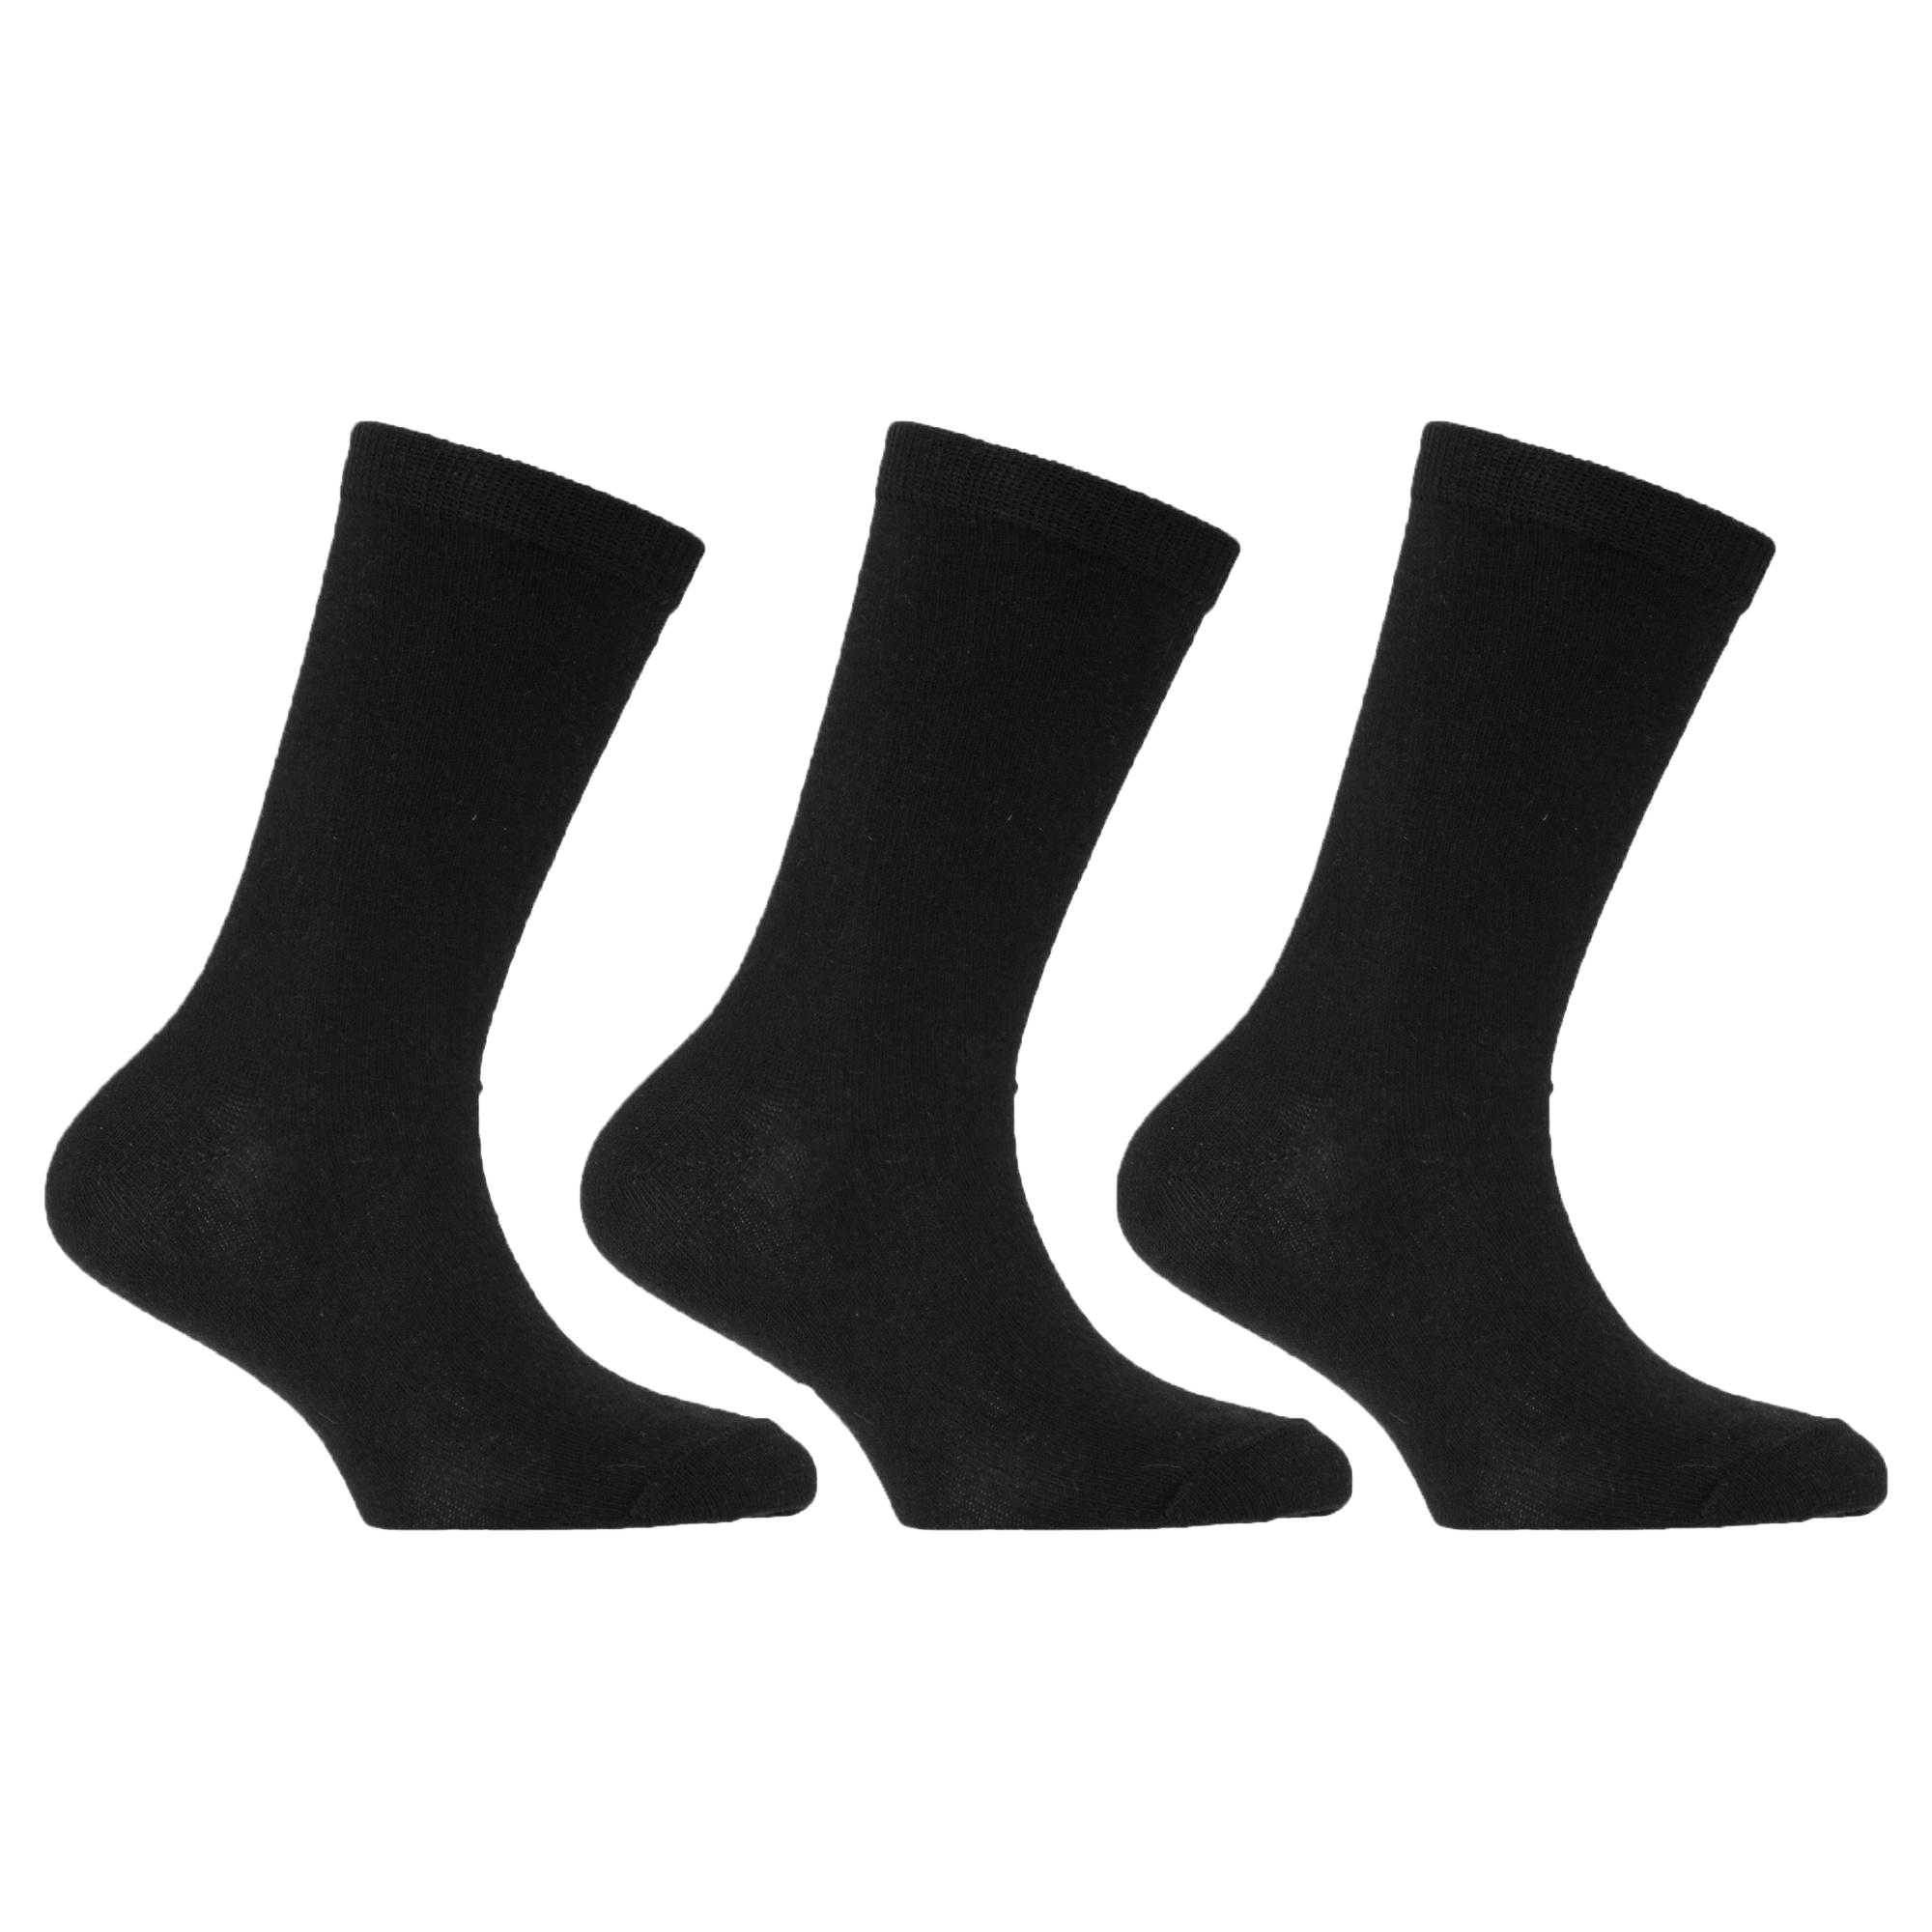 Calcetines De Algodón Lisos De Uniforme Escolar Universal Textiles (pack De 3) - negro - 